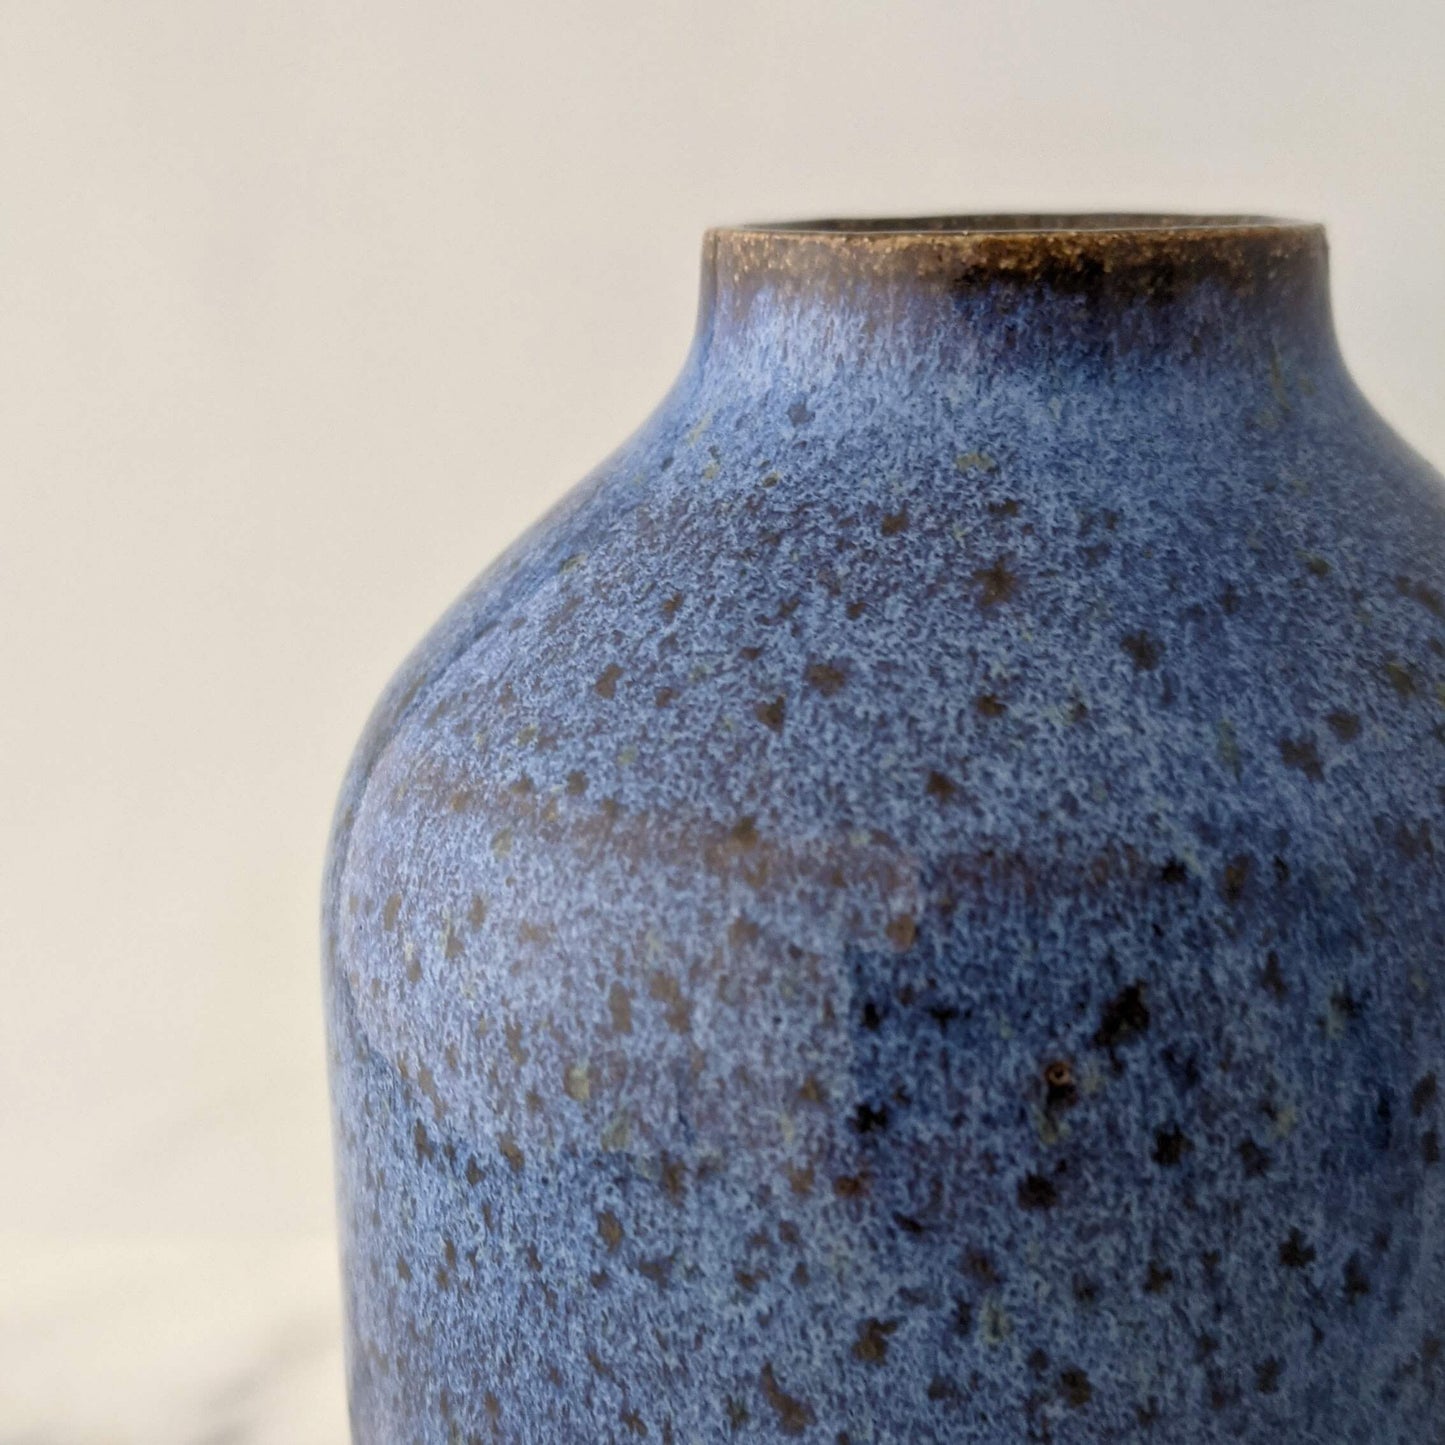 Elias Handmade Ceramic Vase